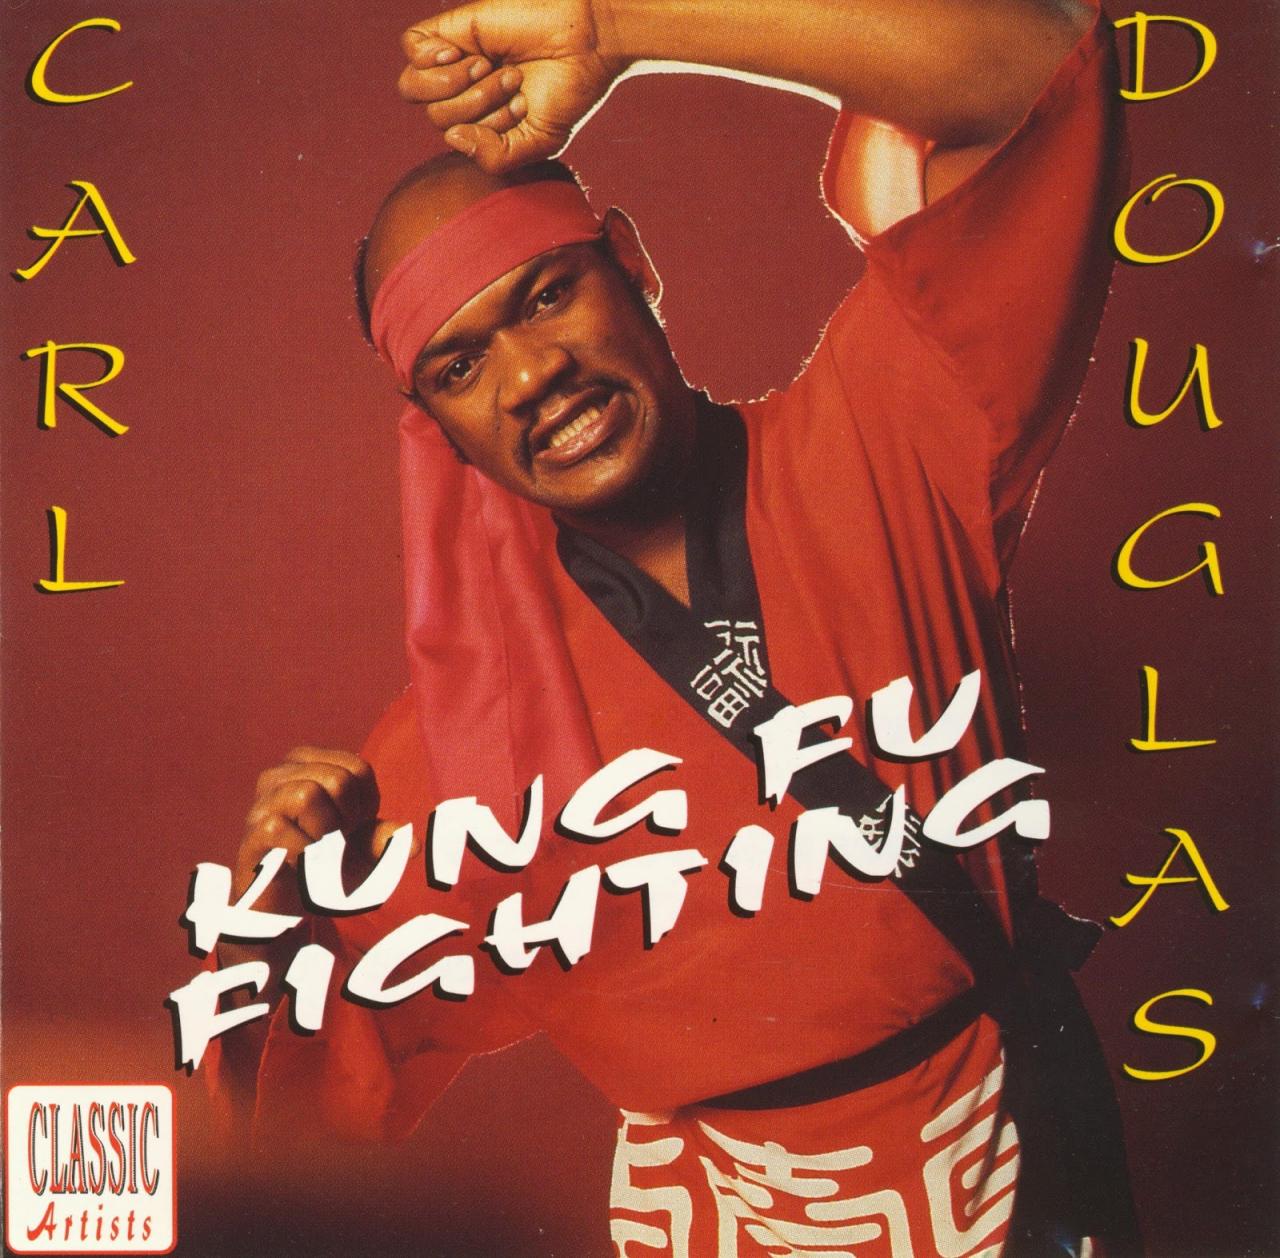 Carl Douglas – Kung Fu Fighting